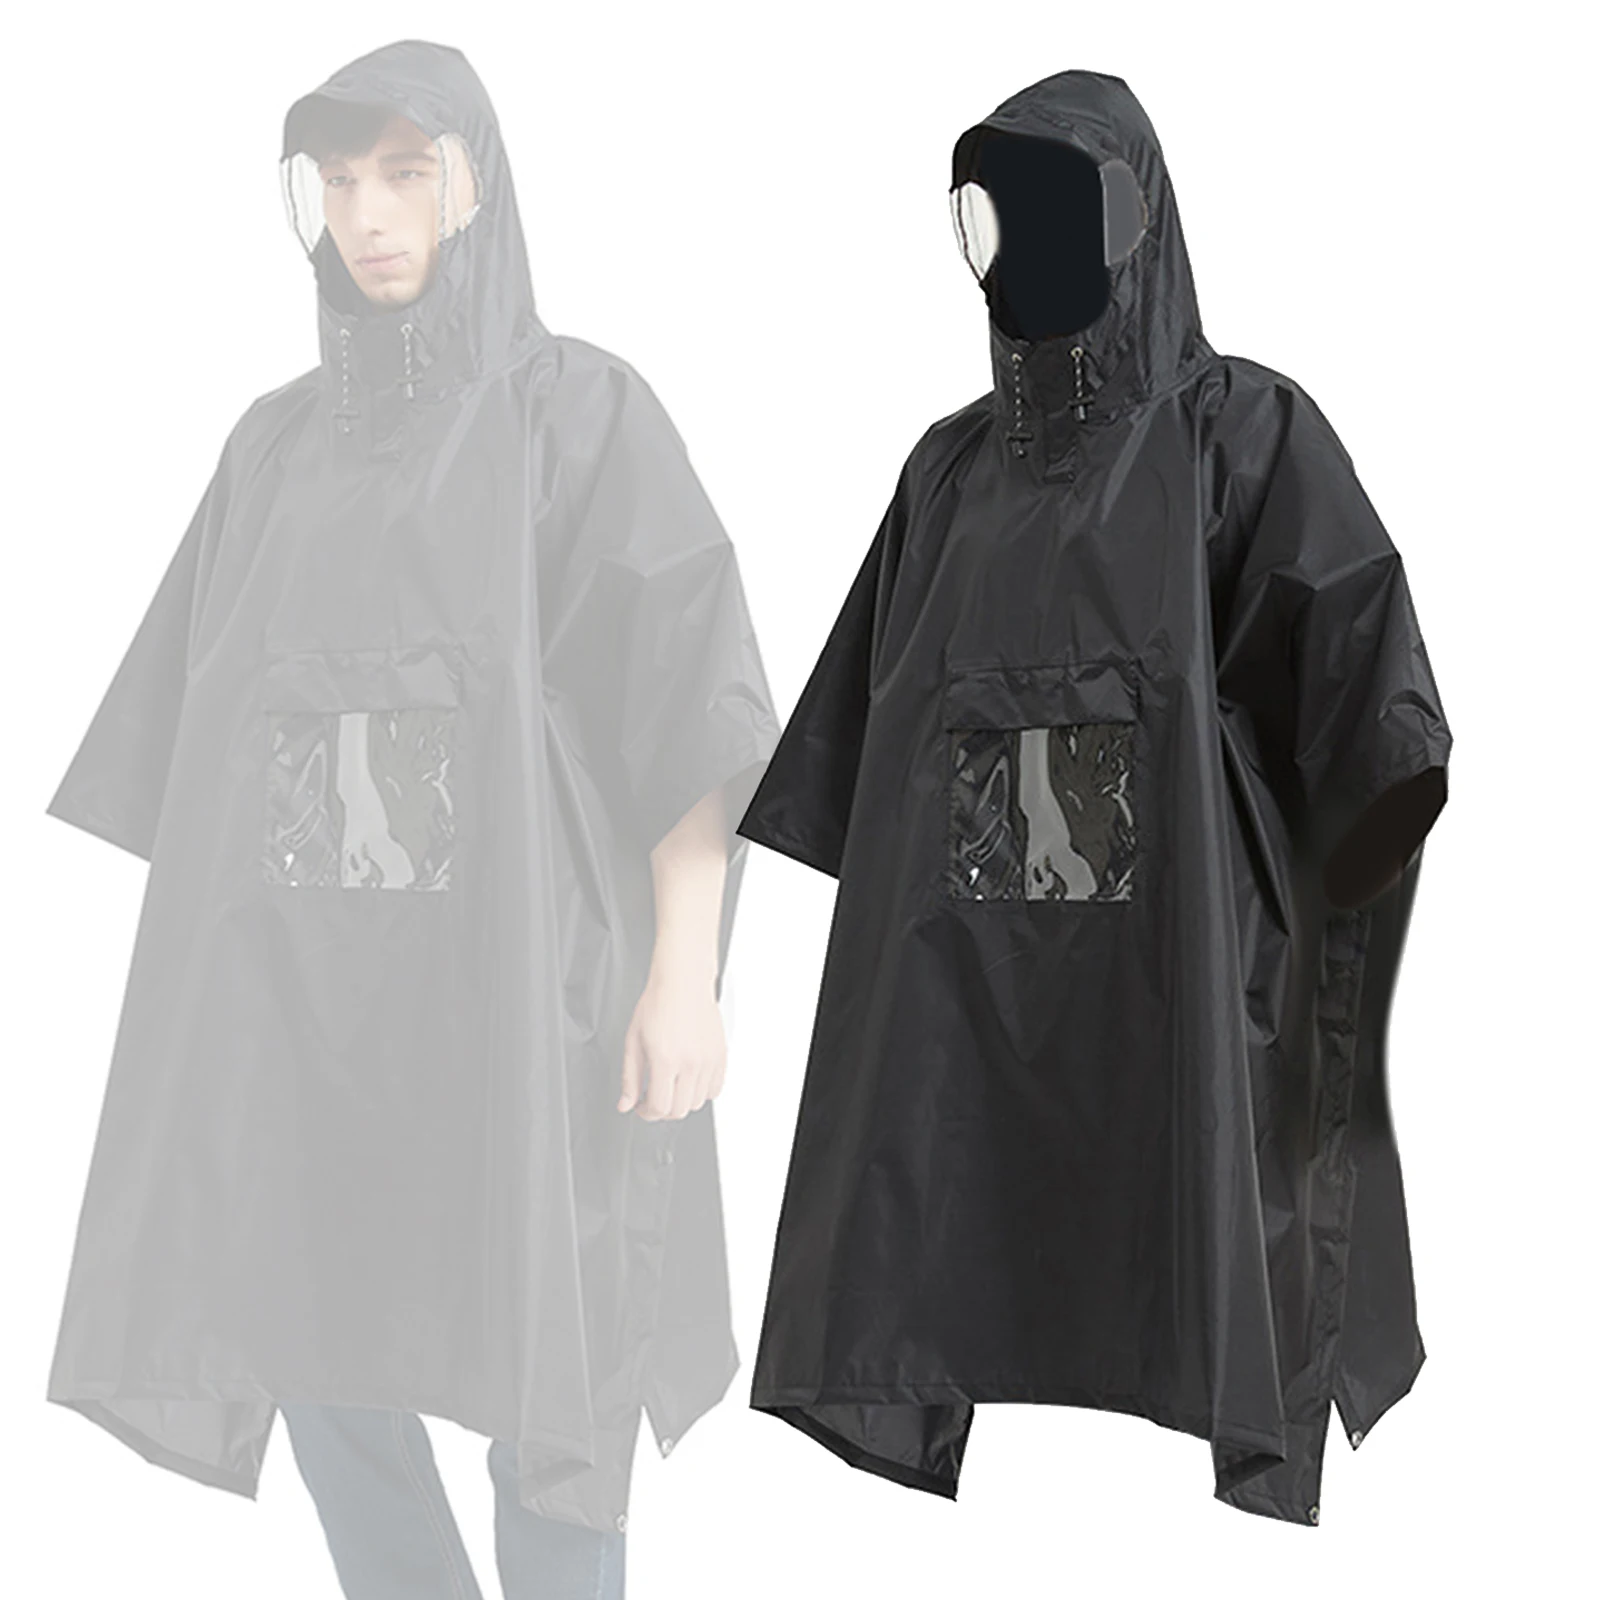 Waterproof Rain Poncho Rain Cape Survival Gear Reusable Coat Jacket Outdoor Activities Raincoat Tent Mat Tarp Travel Rainwear